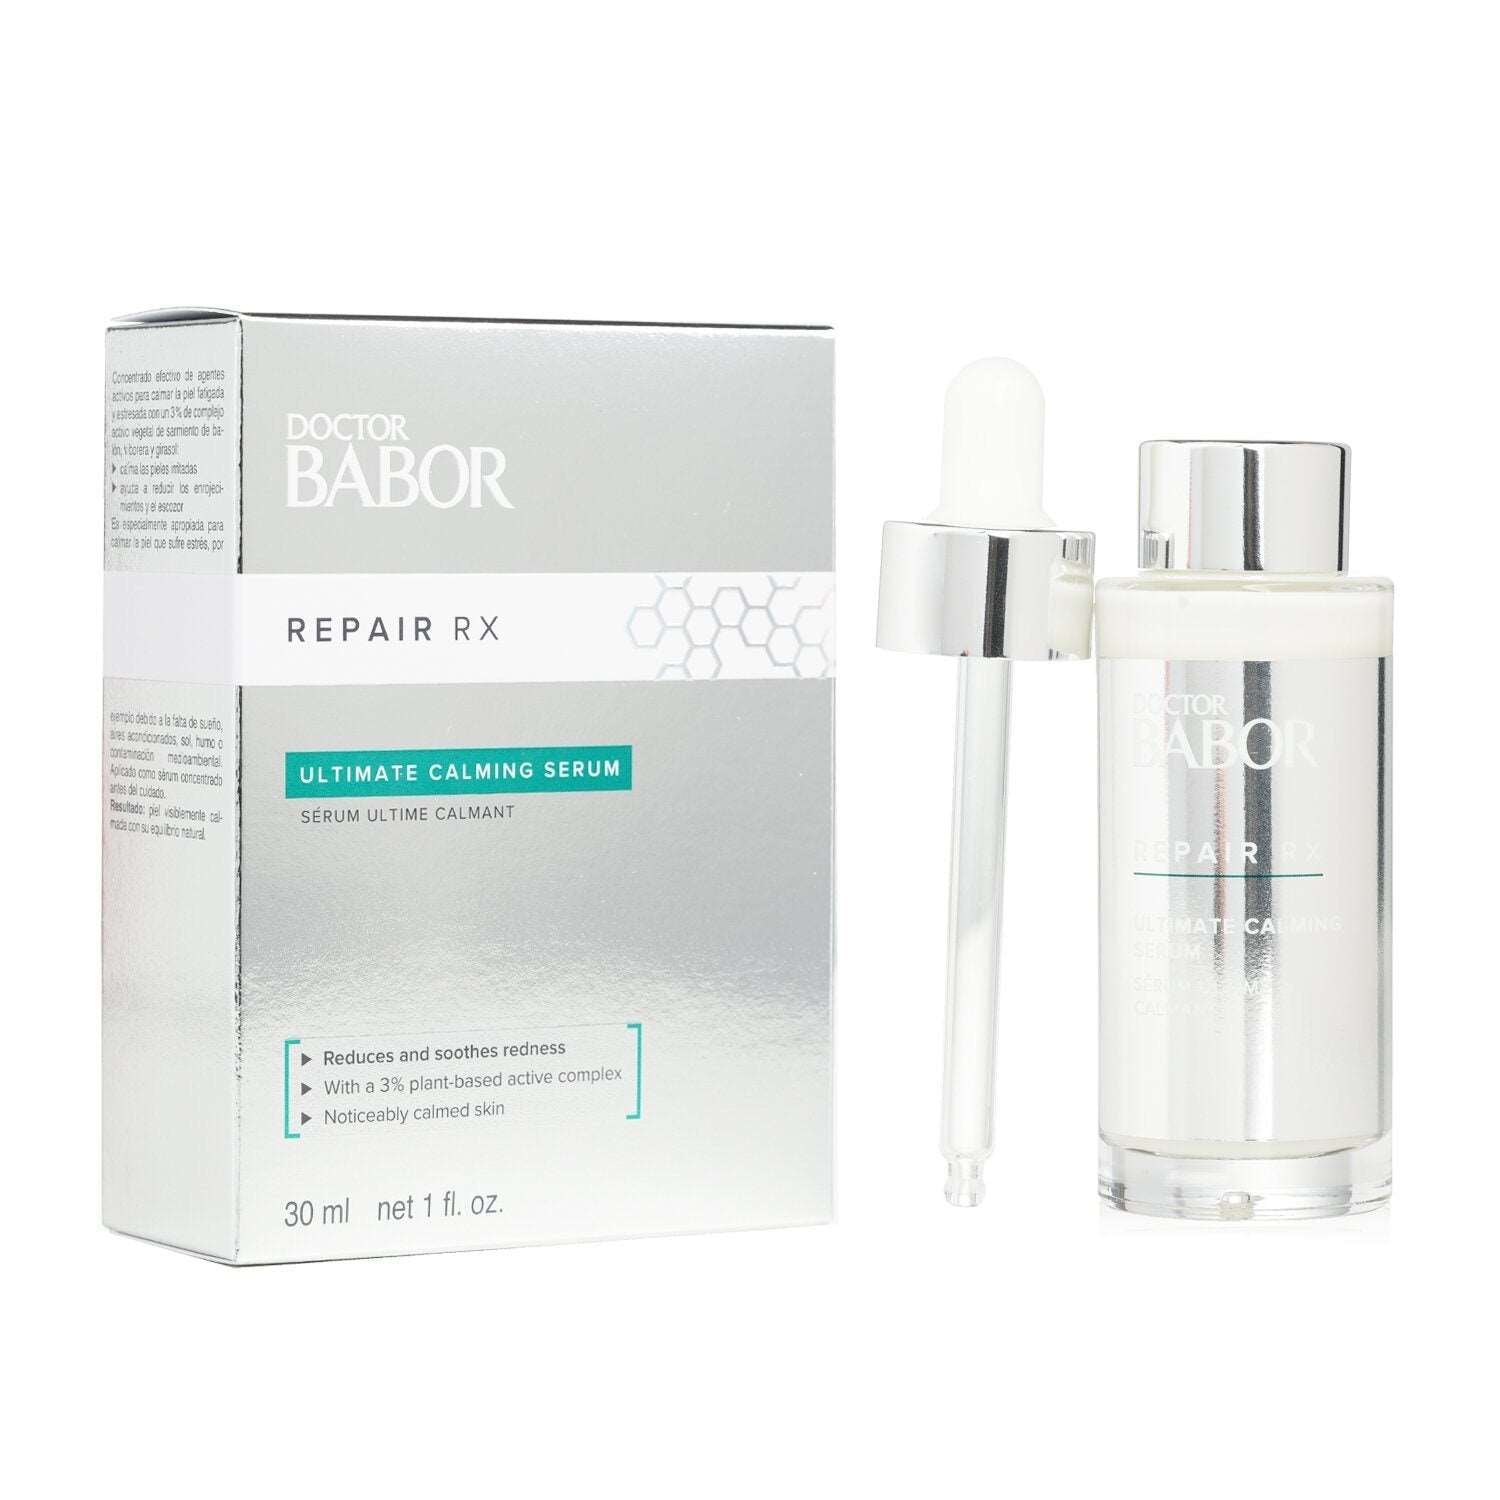 BABOR - Doctor Babor Repair Rx Ultimate Calming Serum - 30ml/1oz 3P's Inclusive Beauty